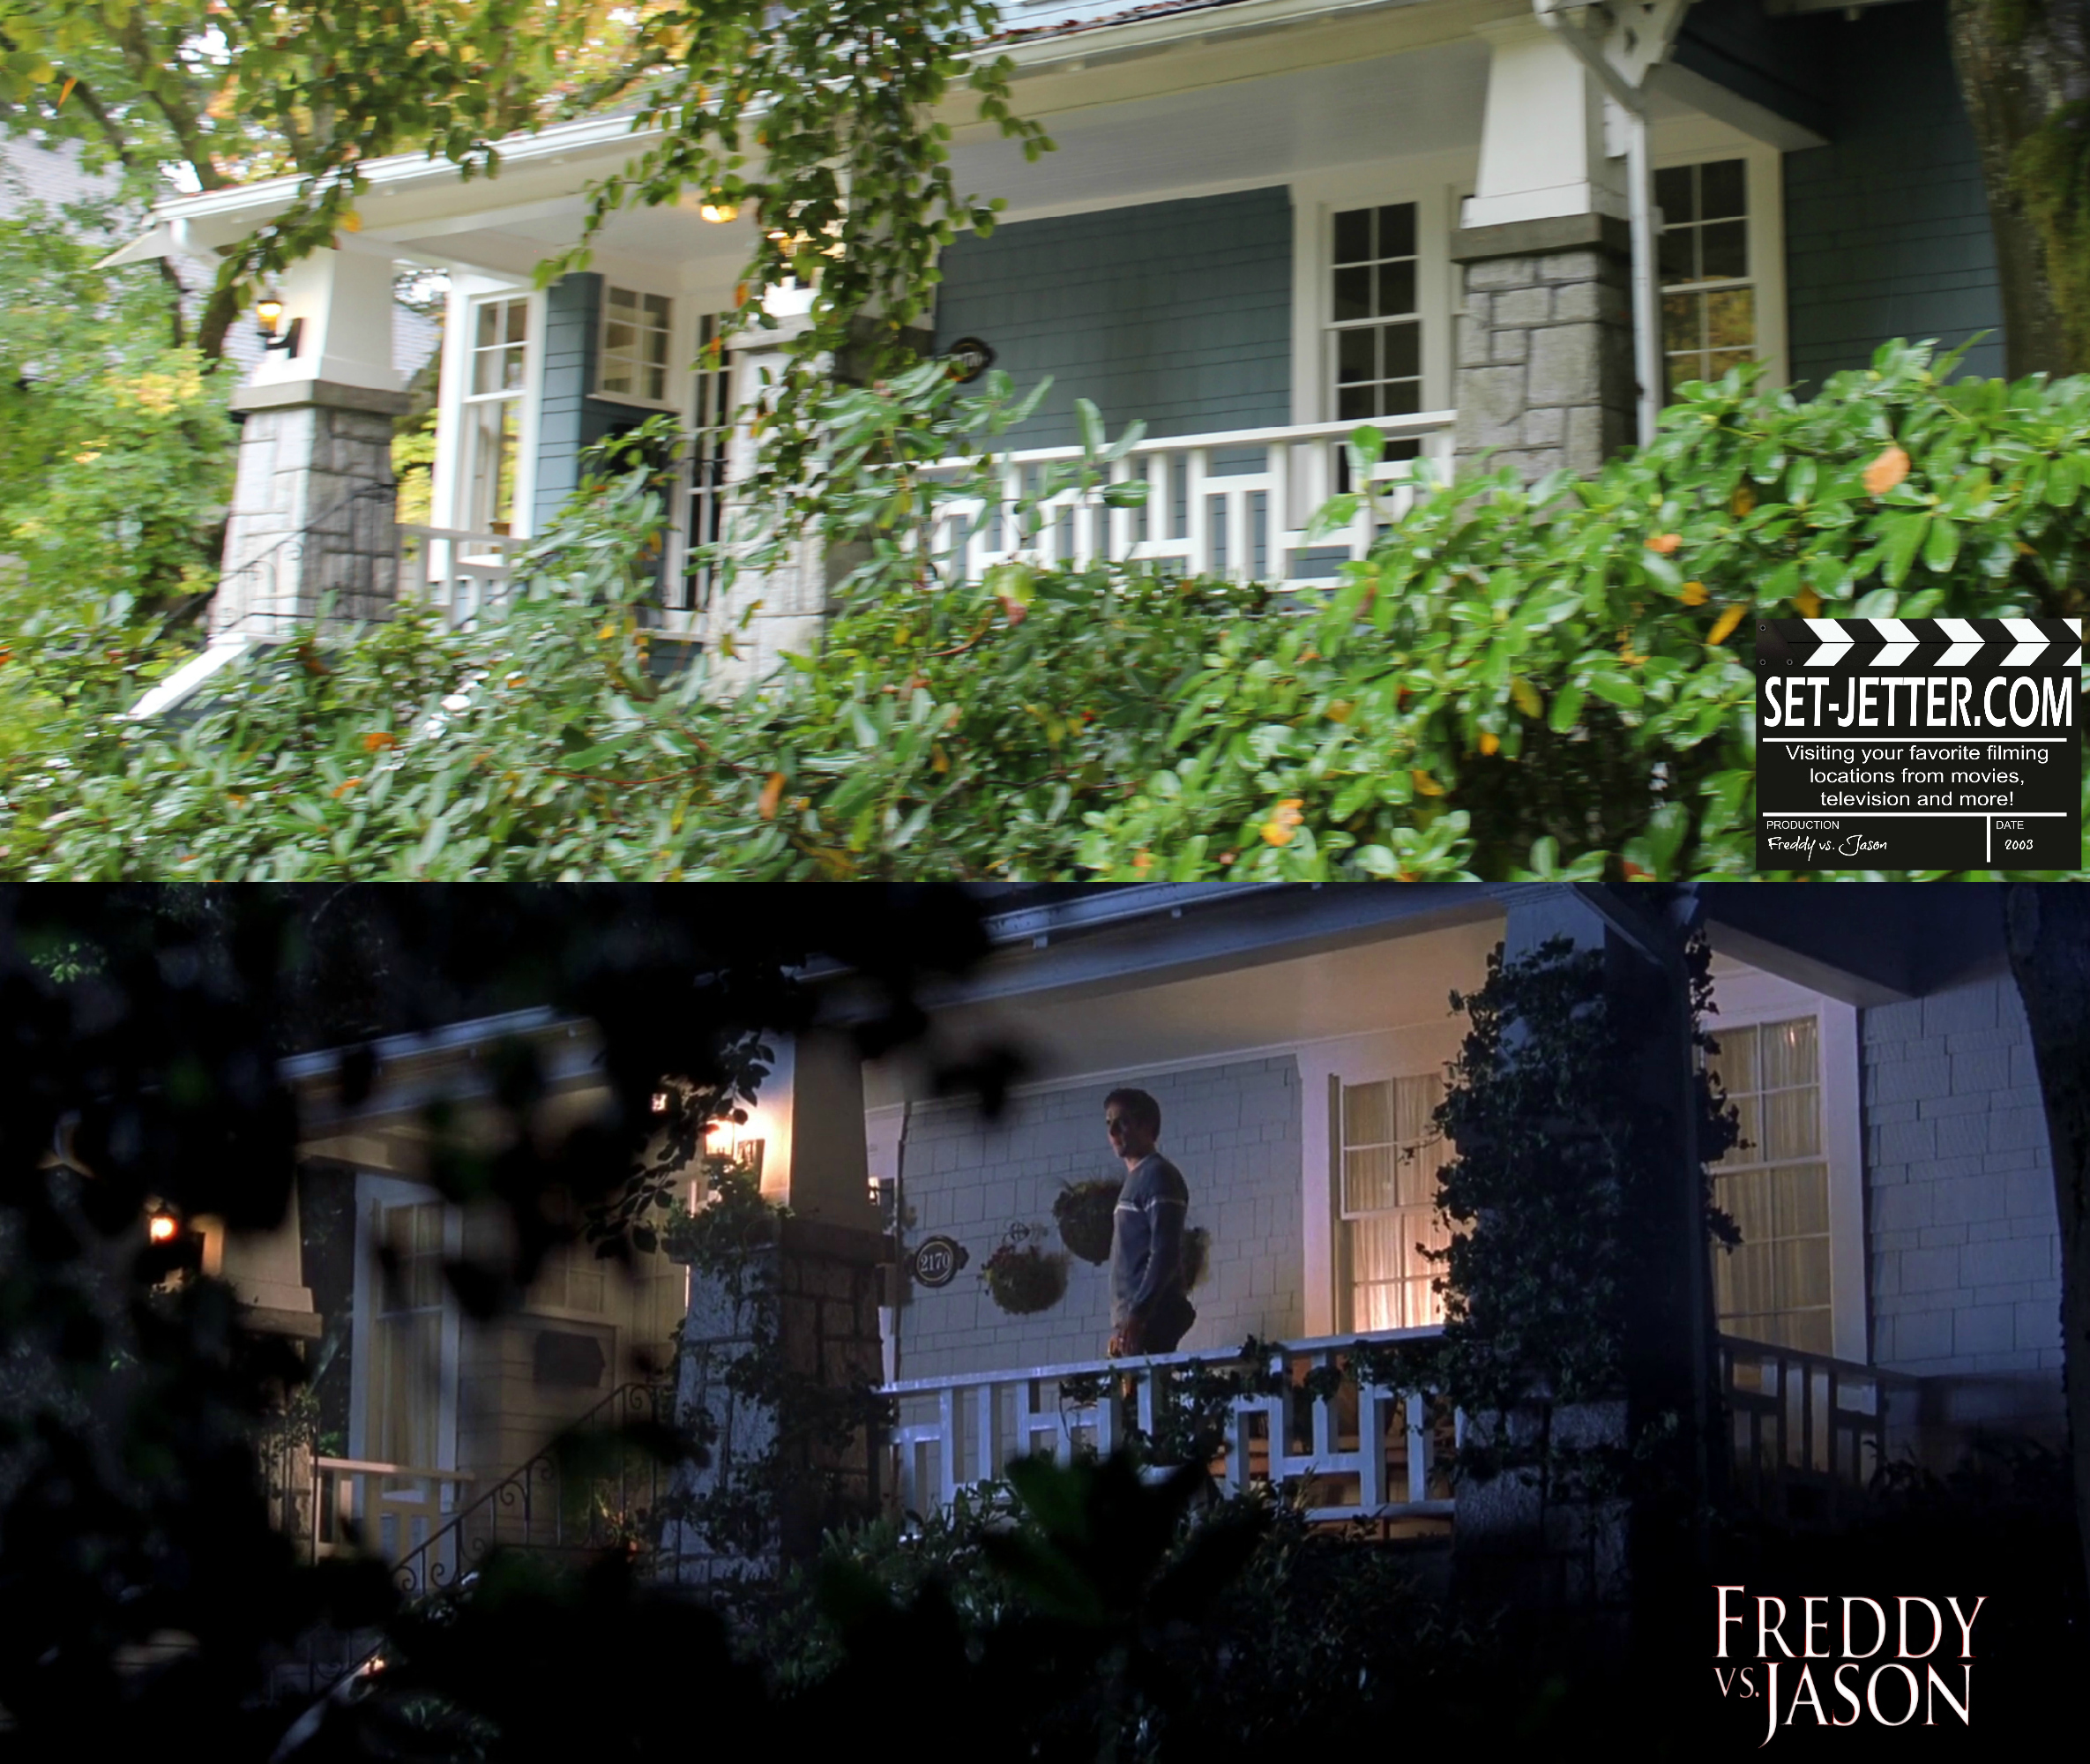 Freddy vs Jason comparison 23.jpg